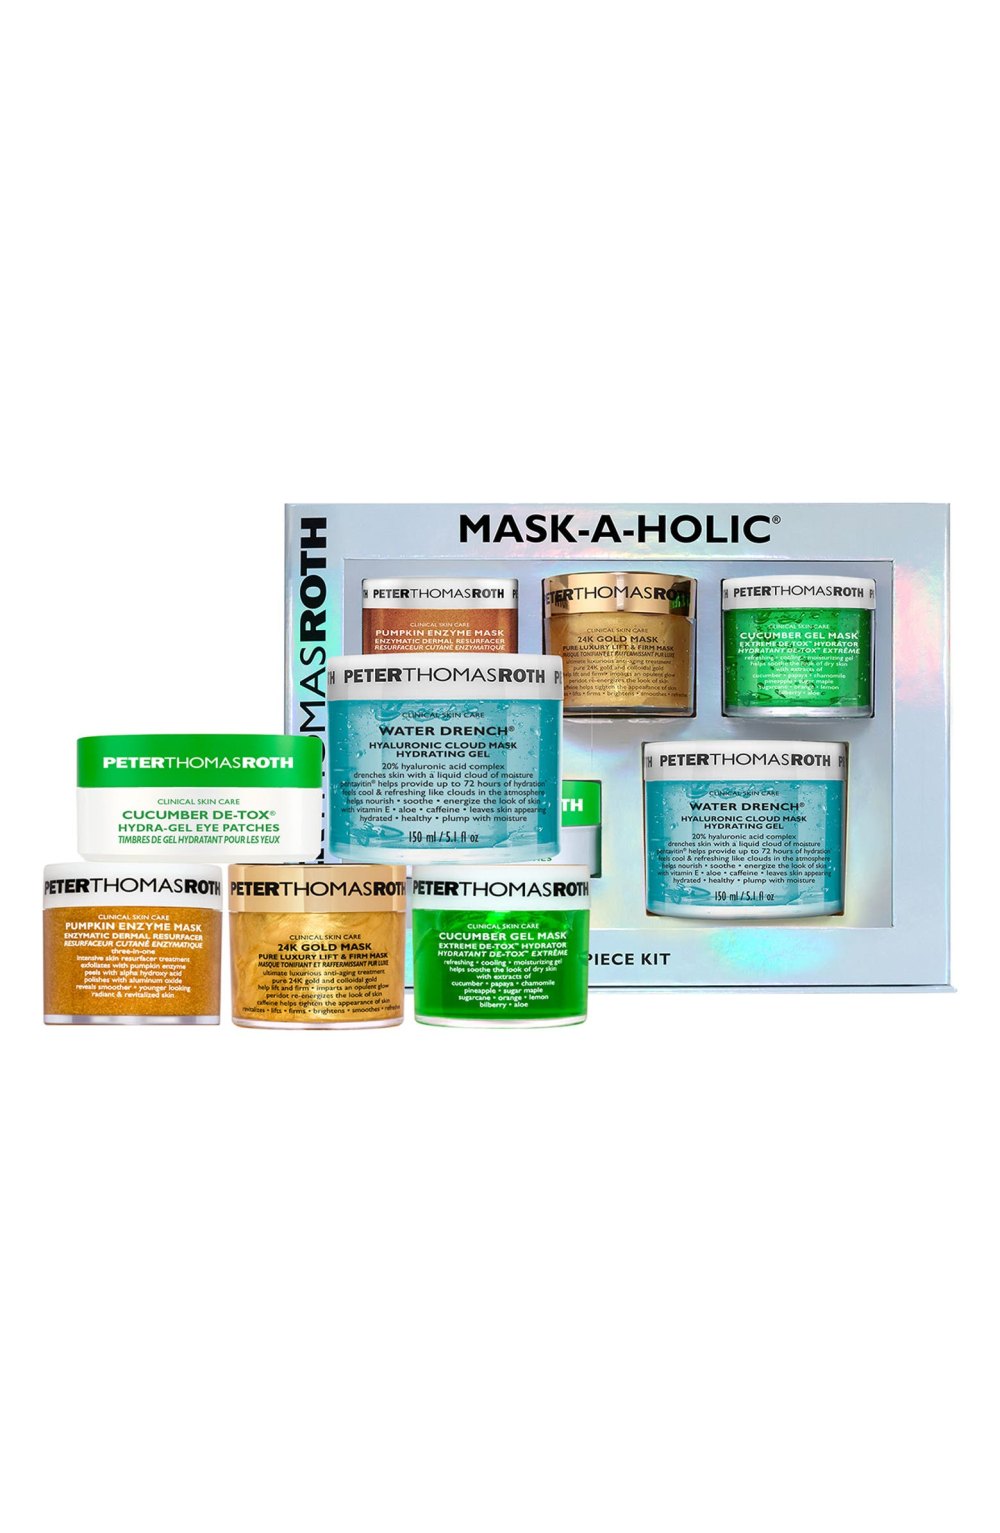 Peter Thomas Roth Mask-A-Holic Set